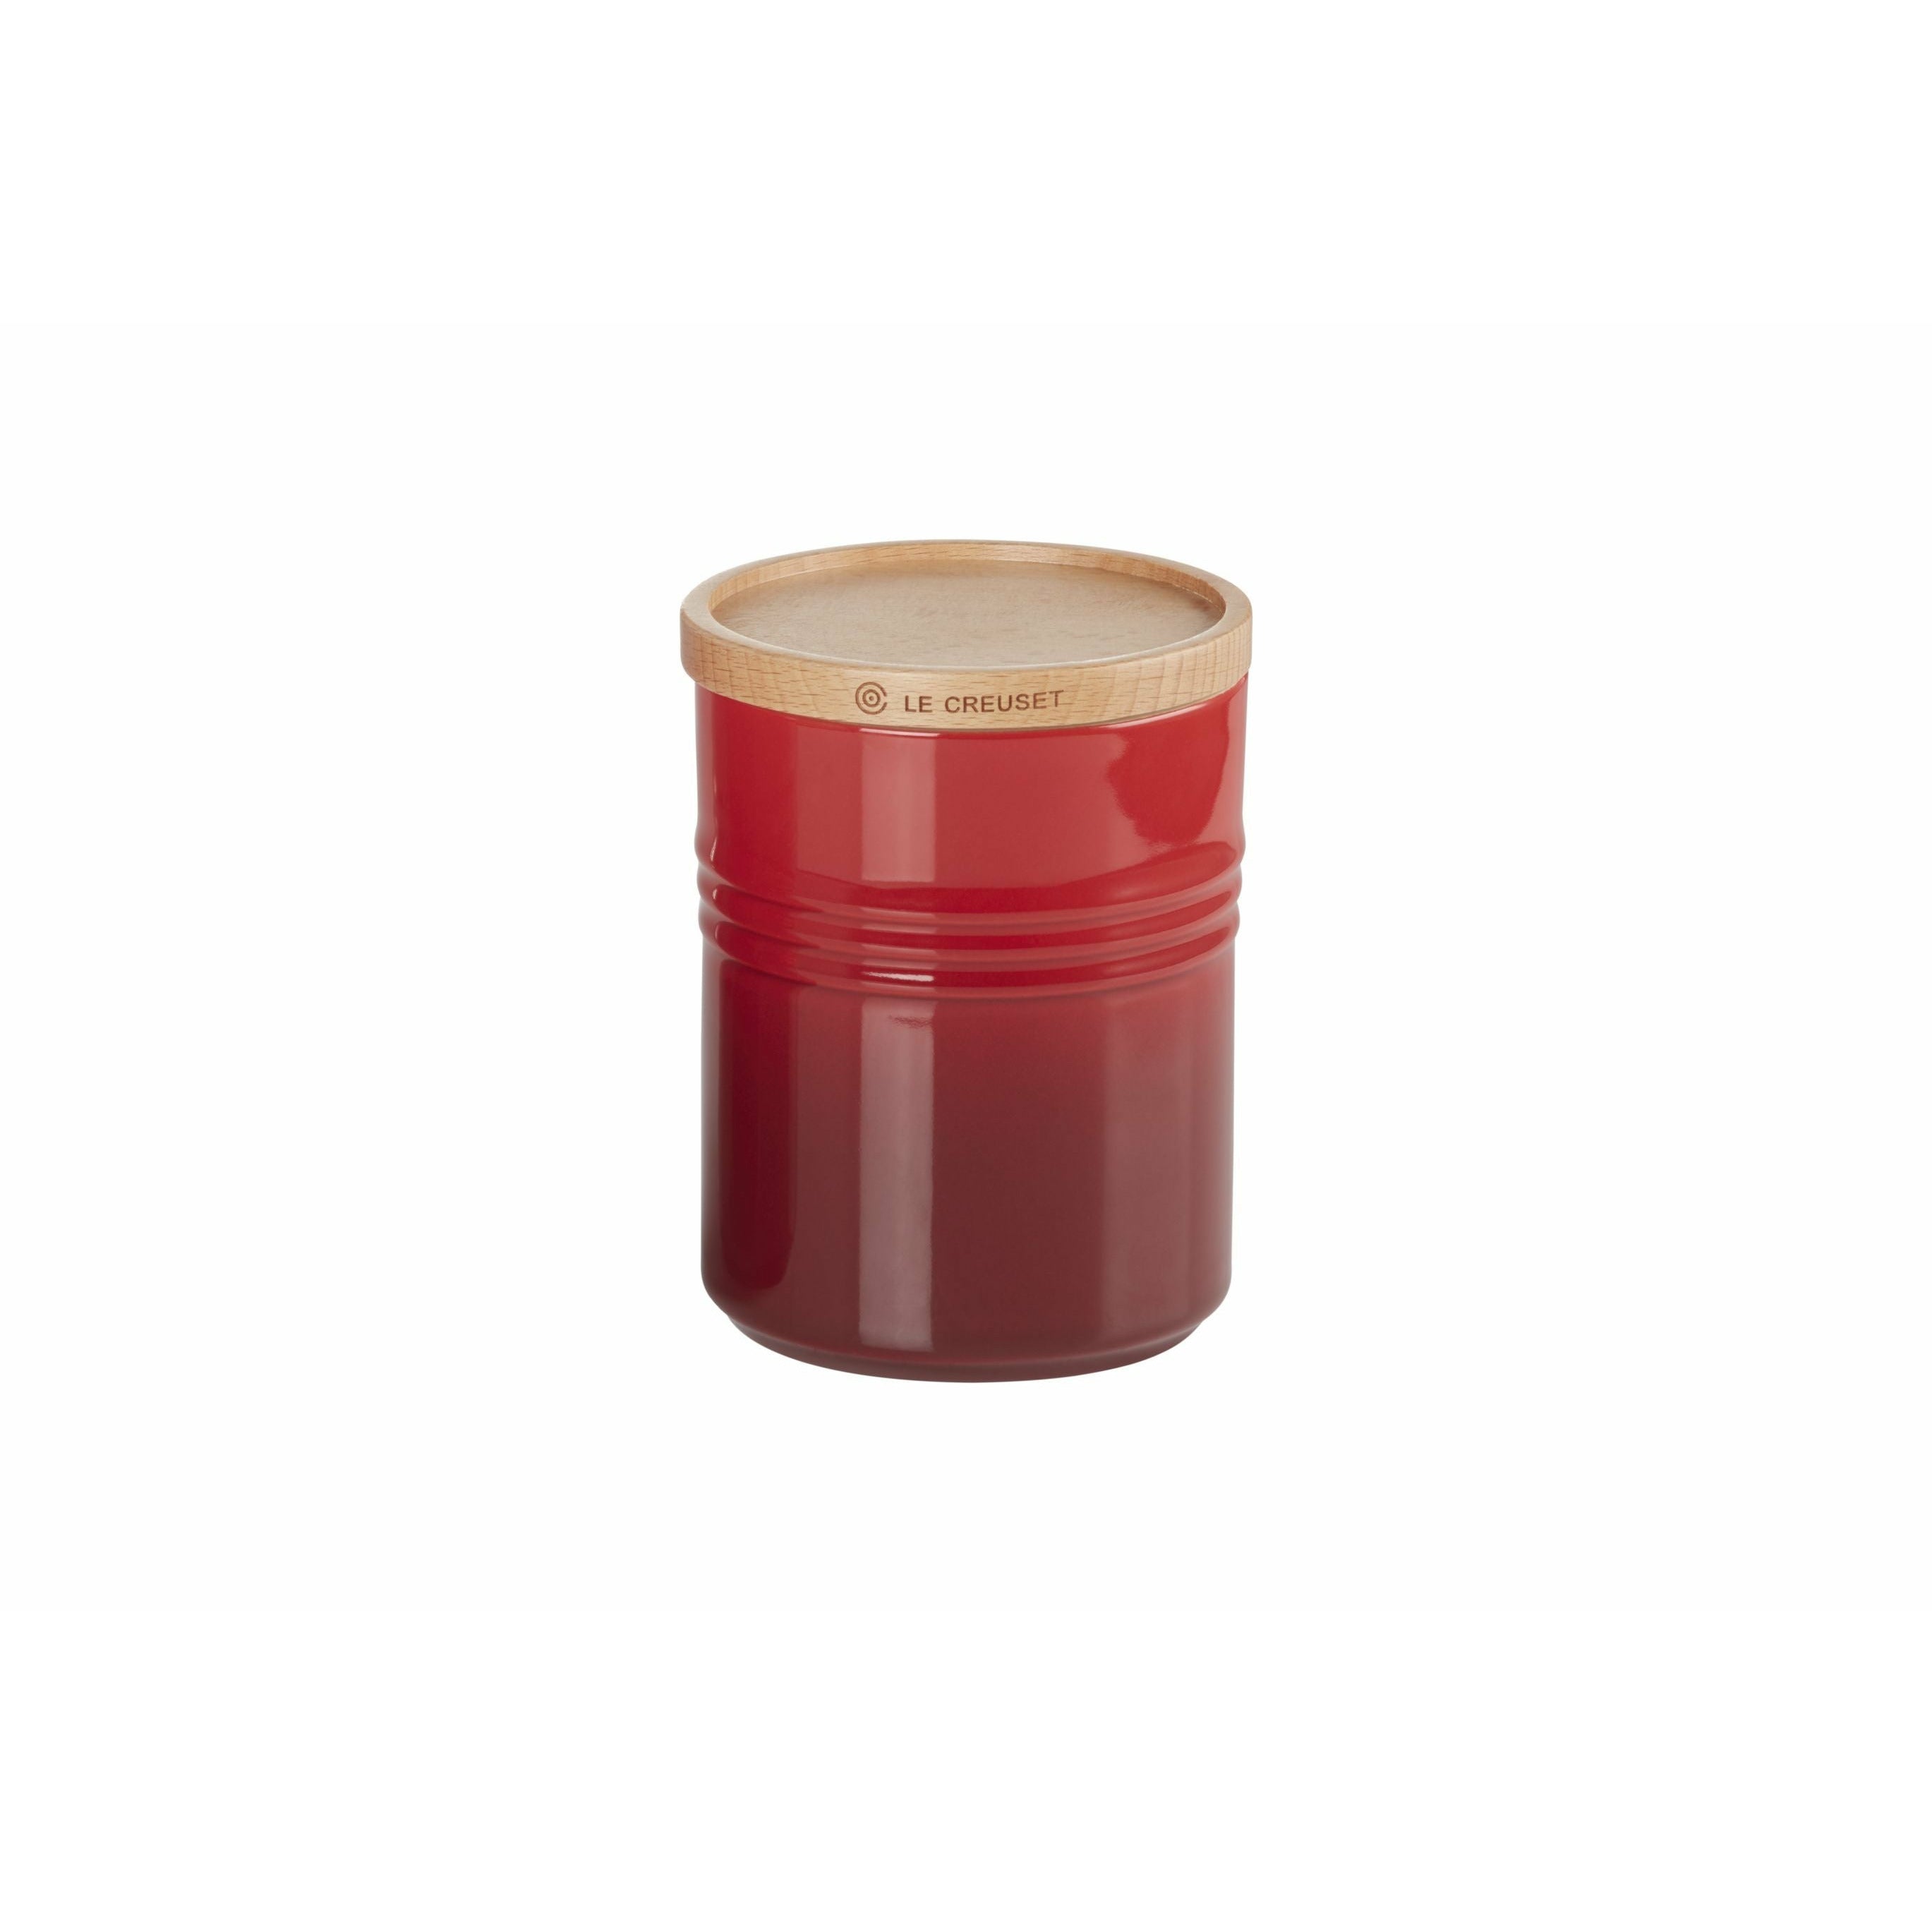 Le Creuset Storage Jar 540 Ml, Cherry Red